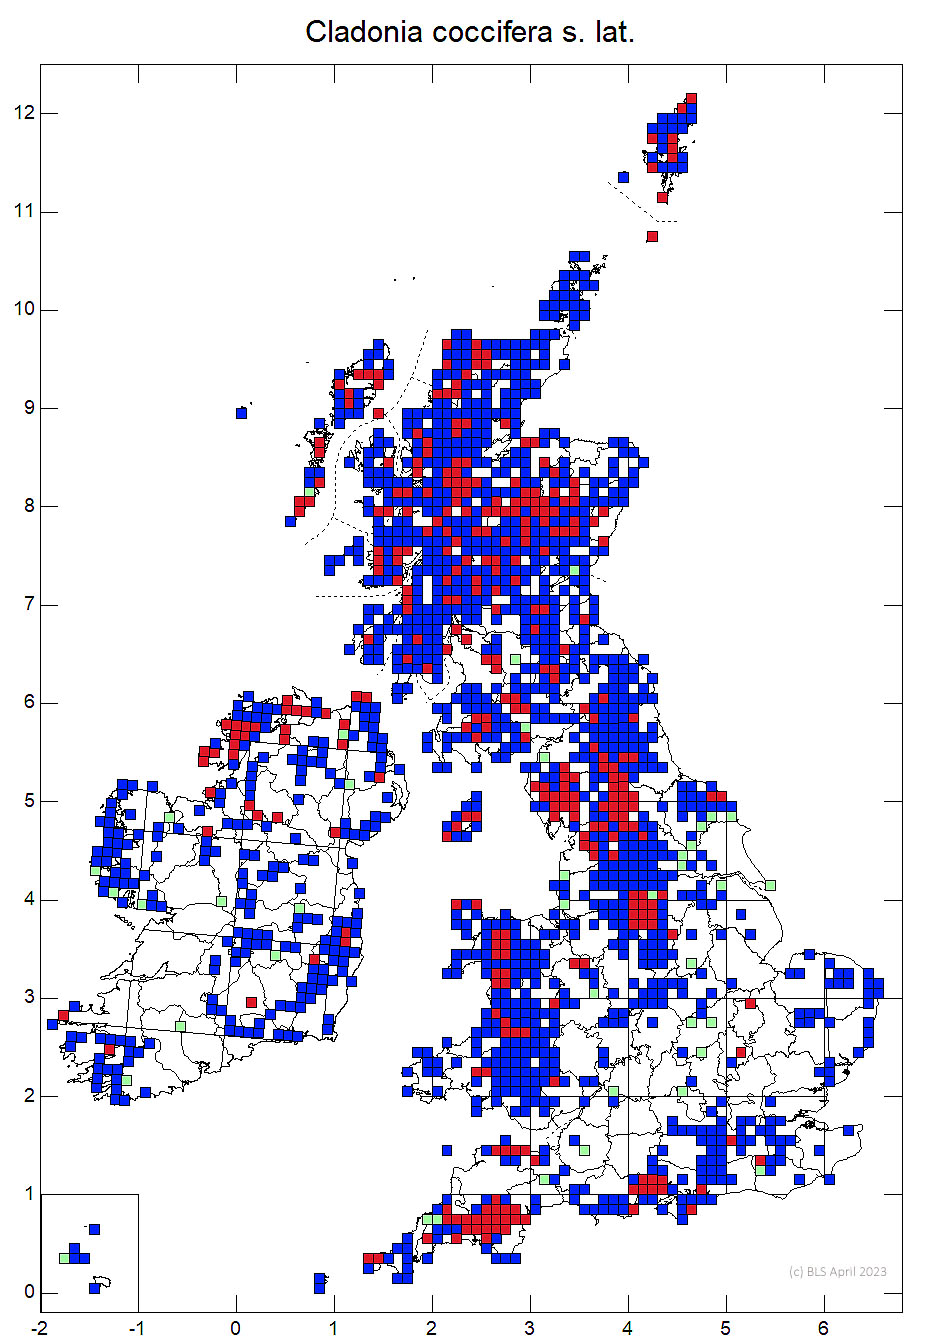 Cladonia coccifera s. lat. 10km sq distribution map